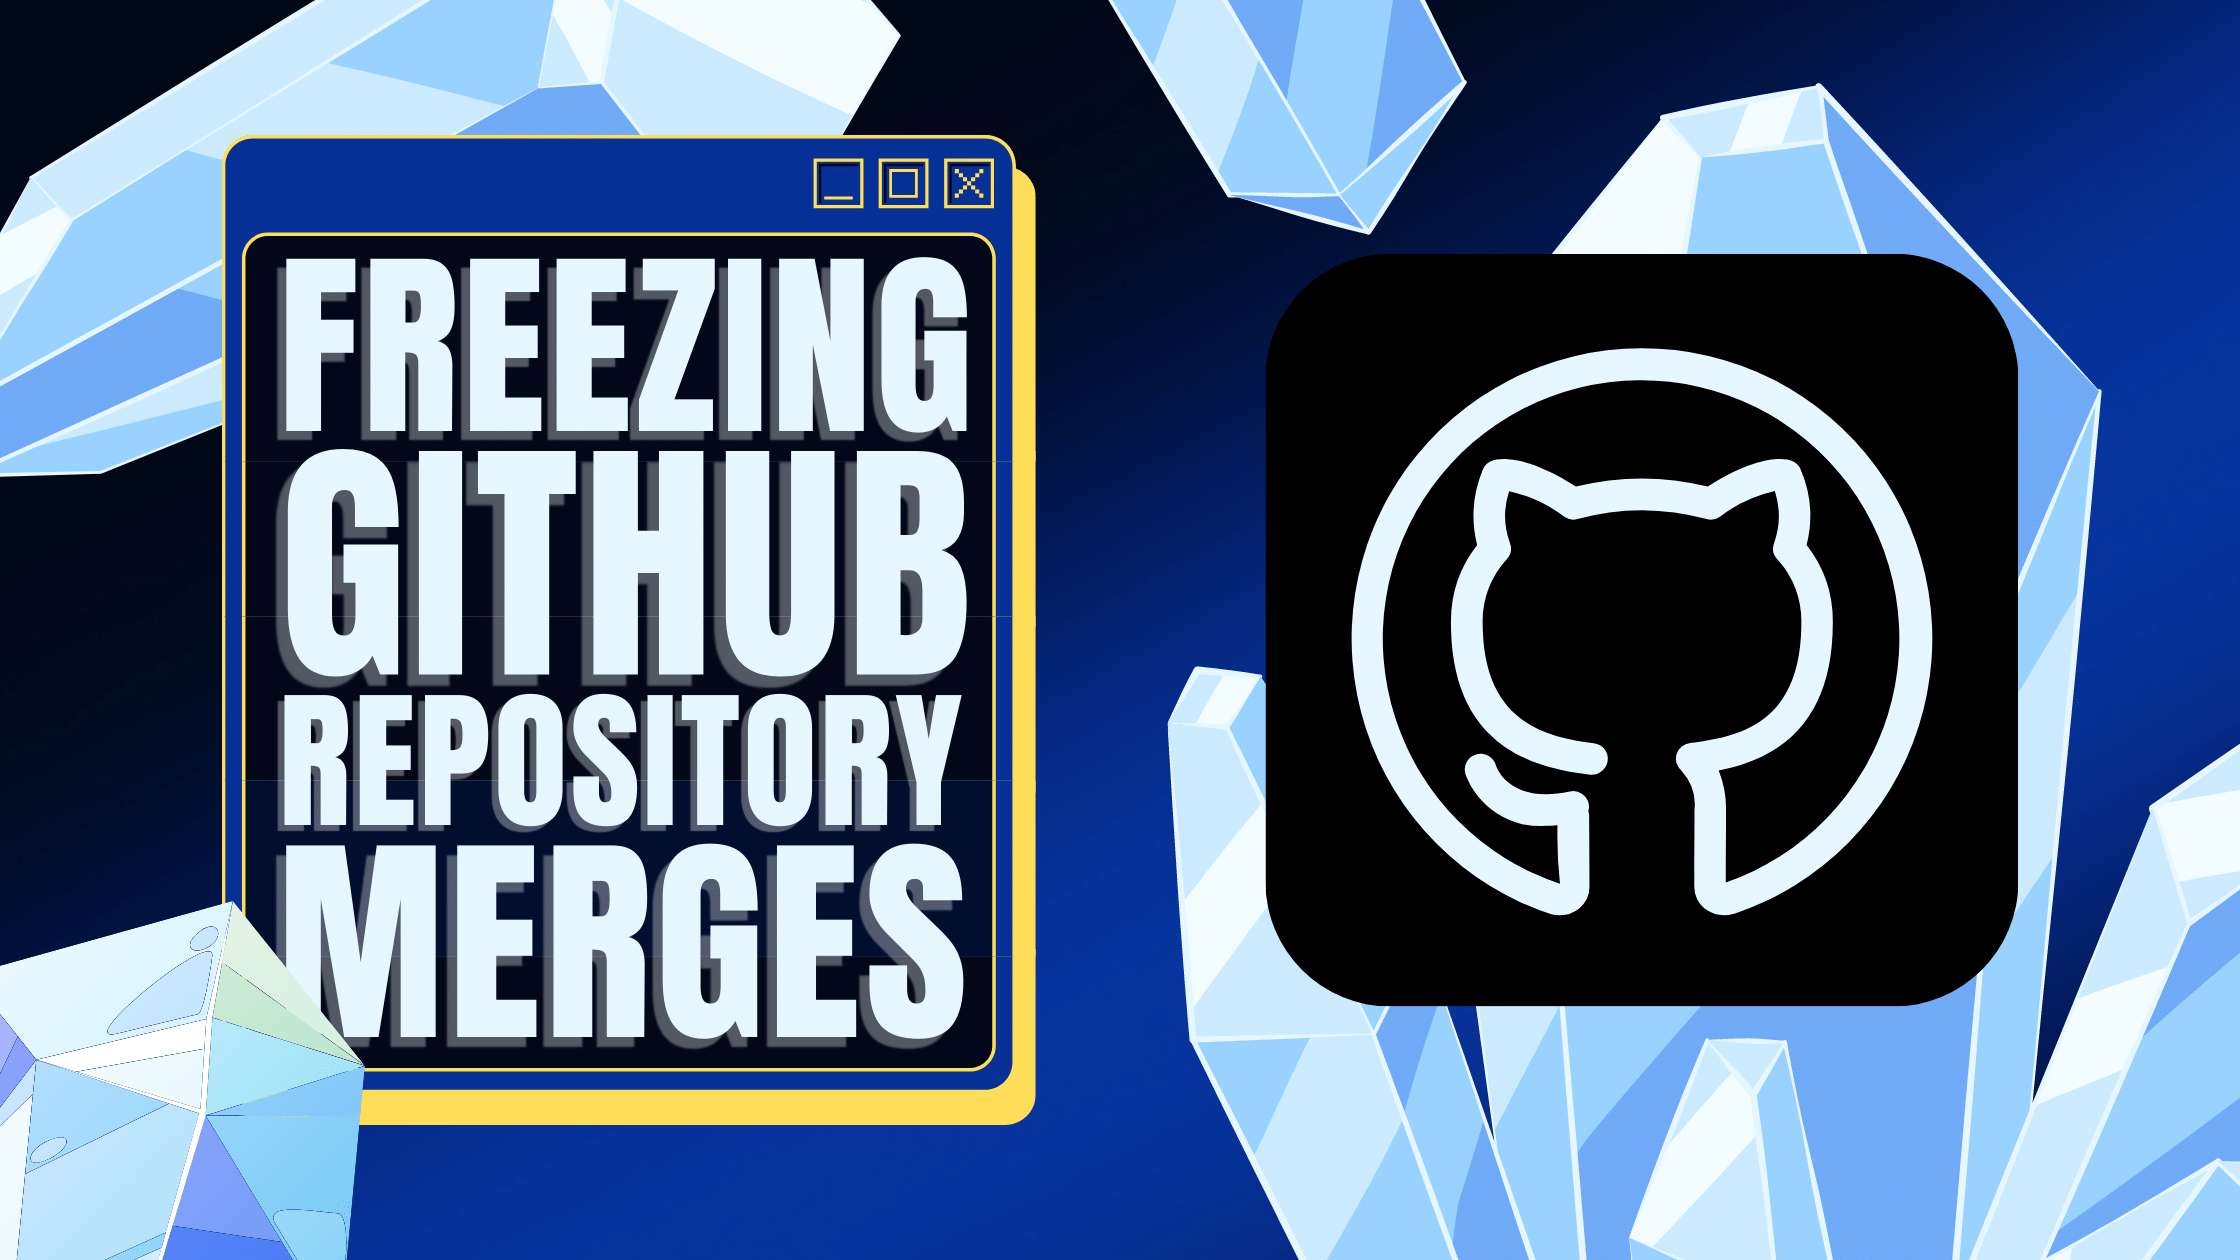 Freezing your GitHub repository merges